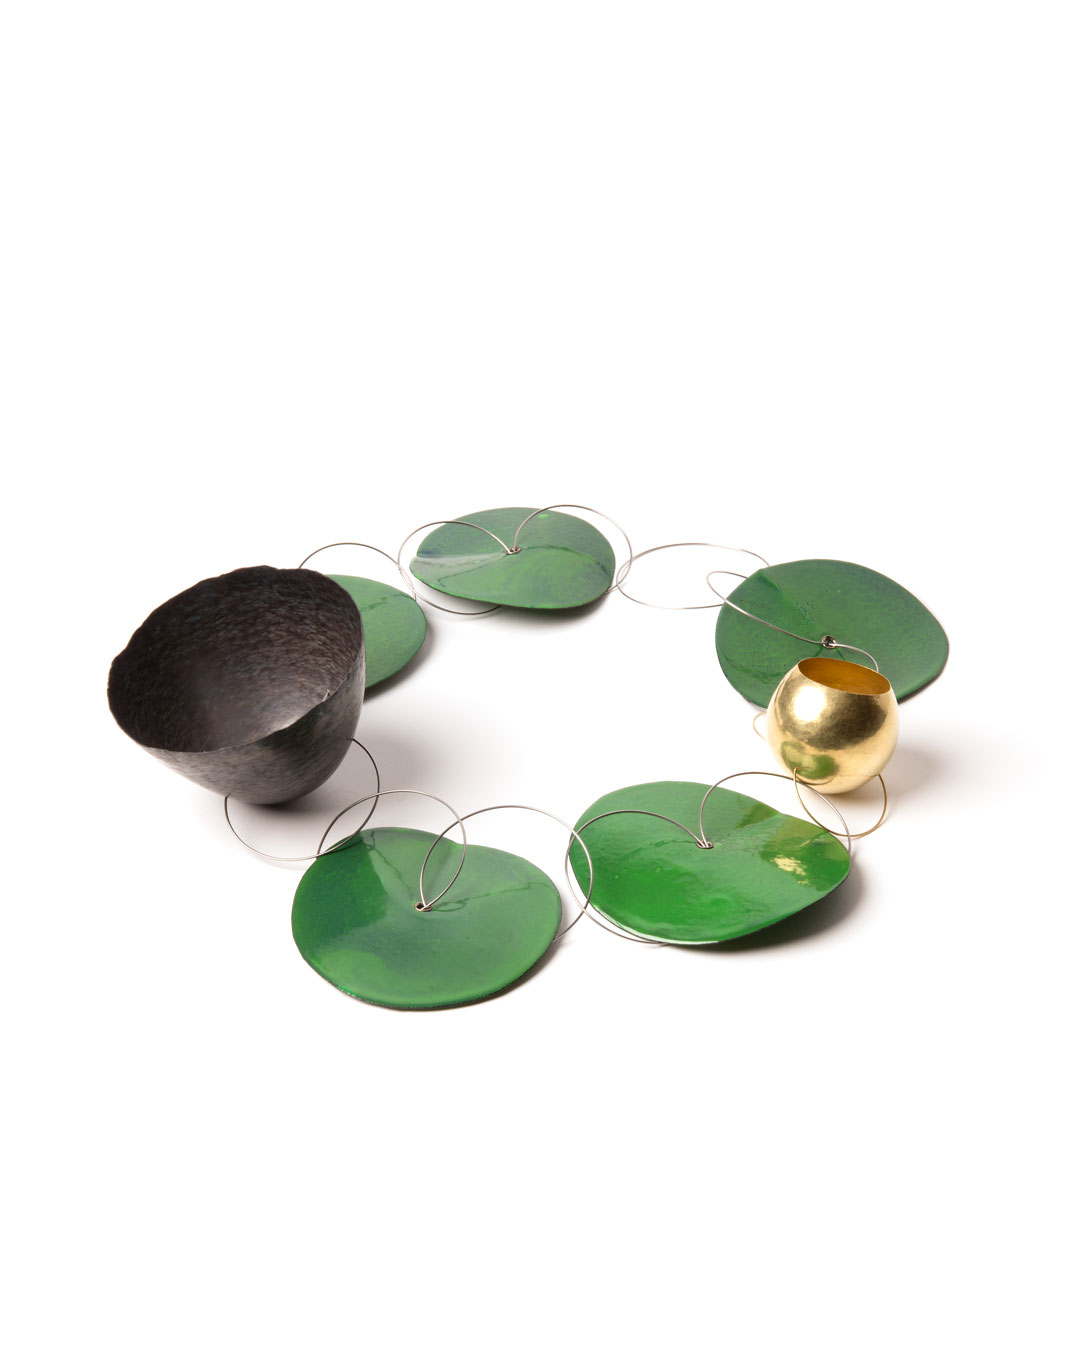 Andrea Wippermann, Garten - Die Nacht (Garden – The Night), 2015, necklace; gold, titanium, enamelled steel, stainless steel, silver, D 90 mm, H 60 mm, €9500